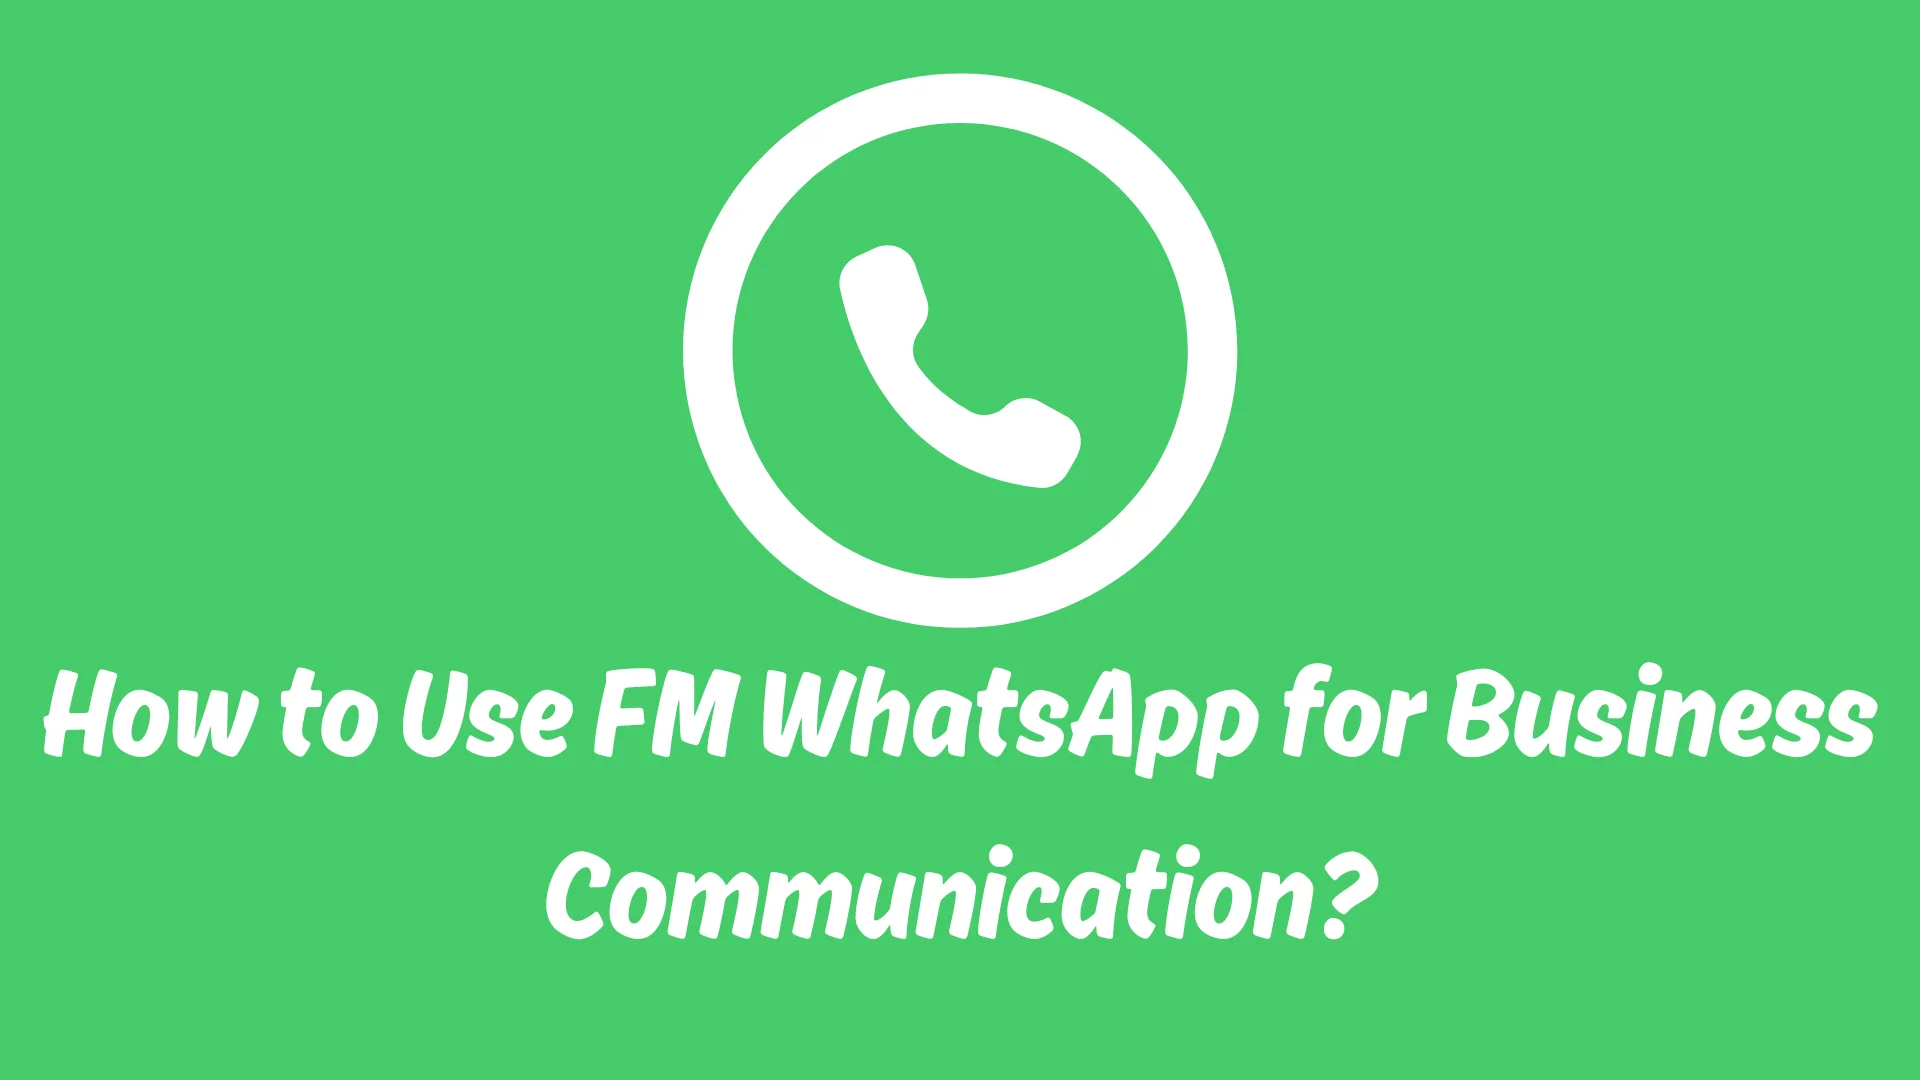 FM WhatsApp for Business communication